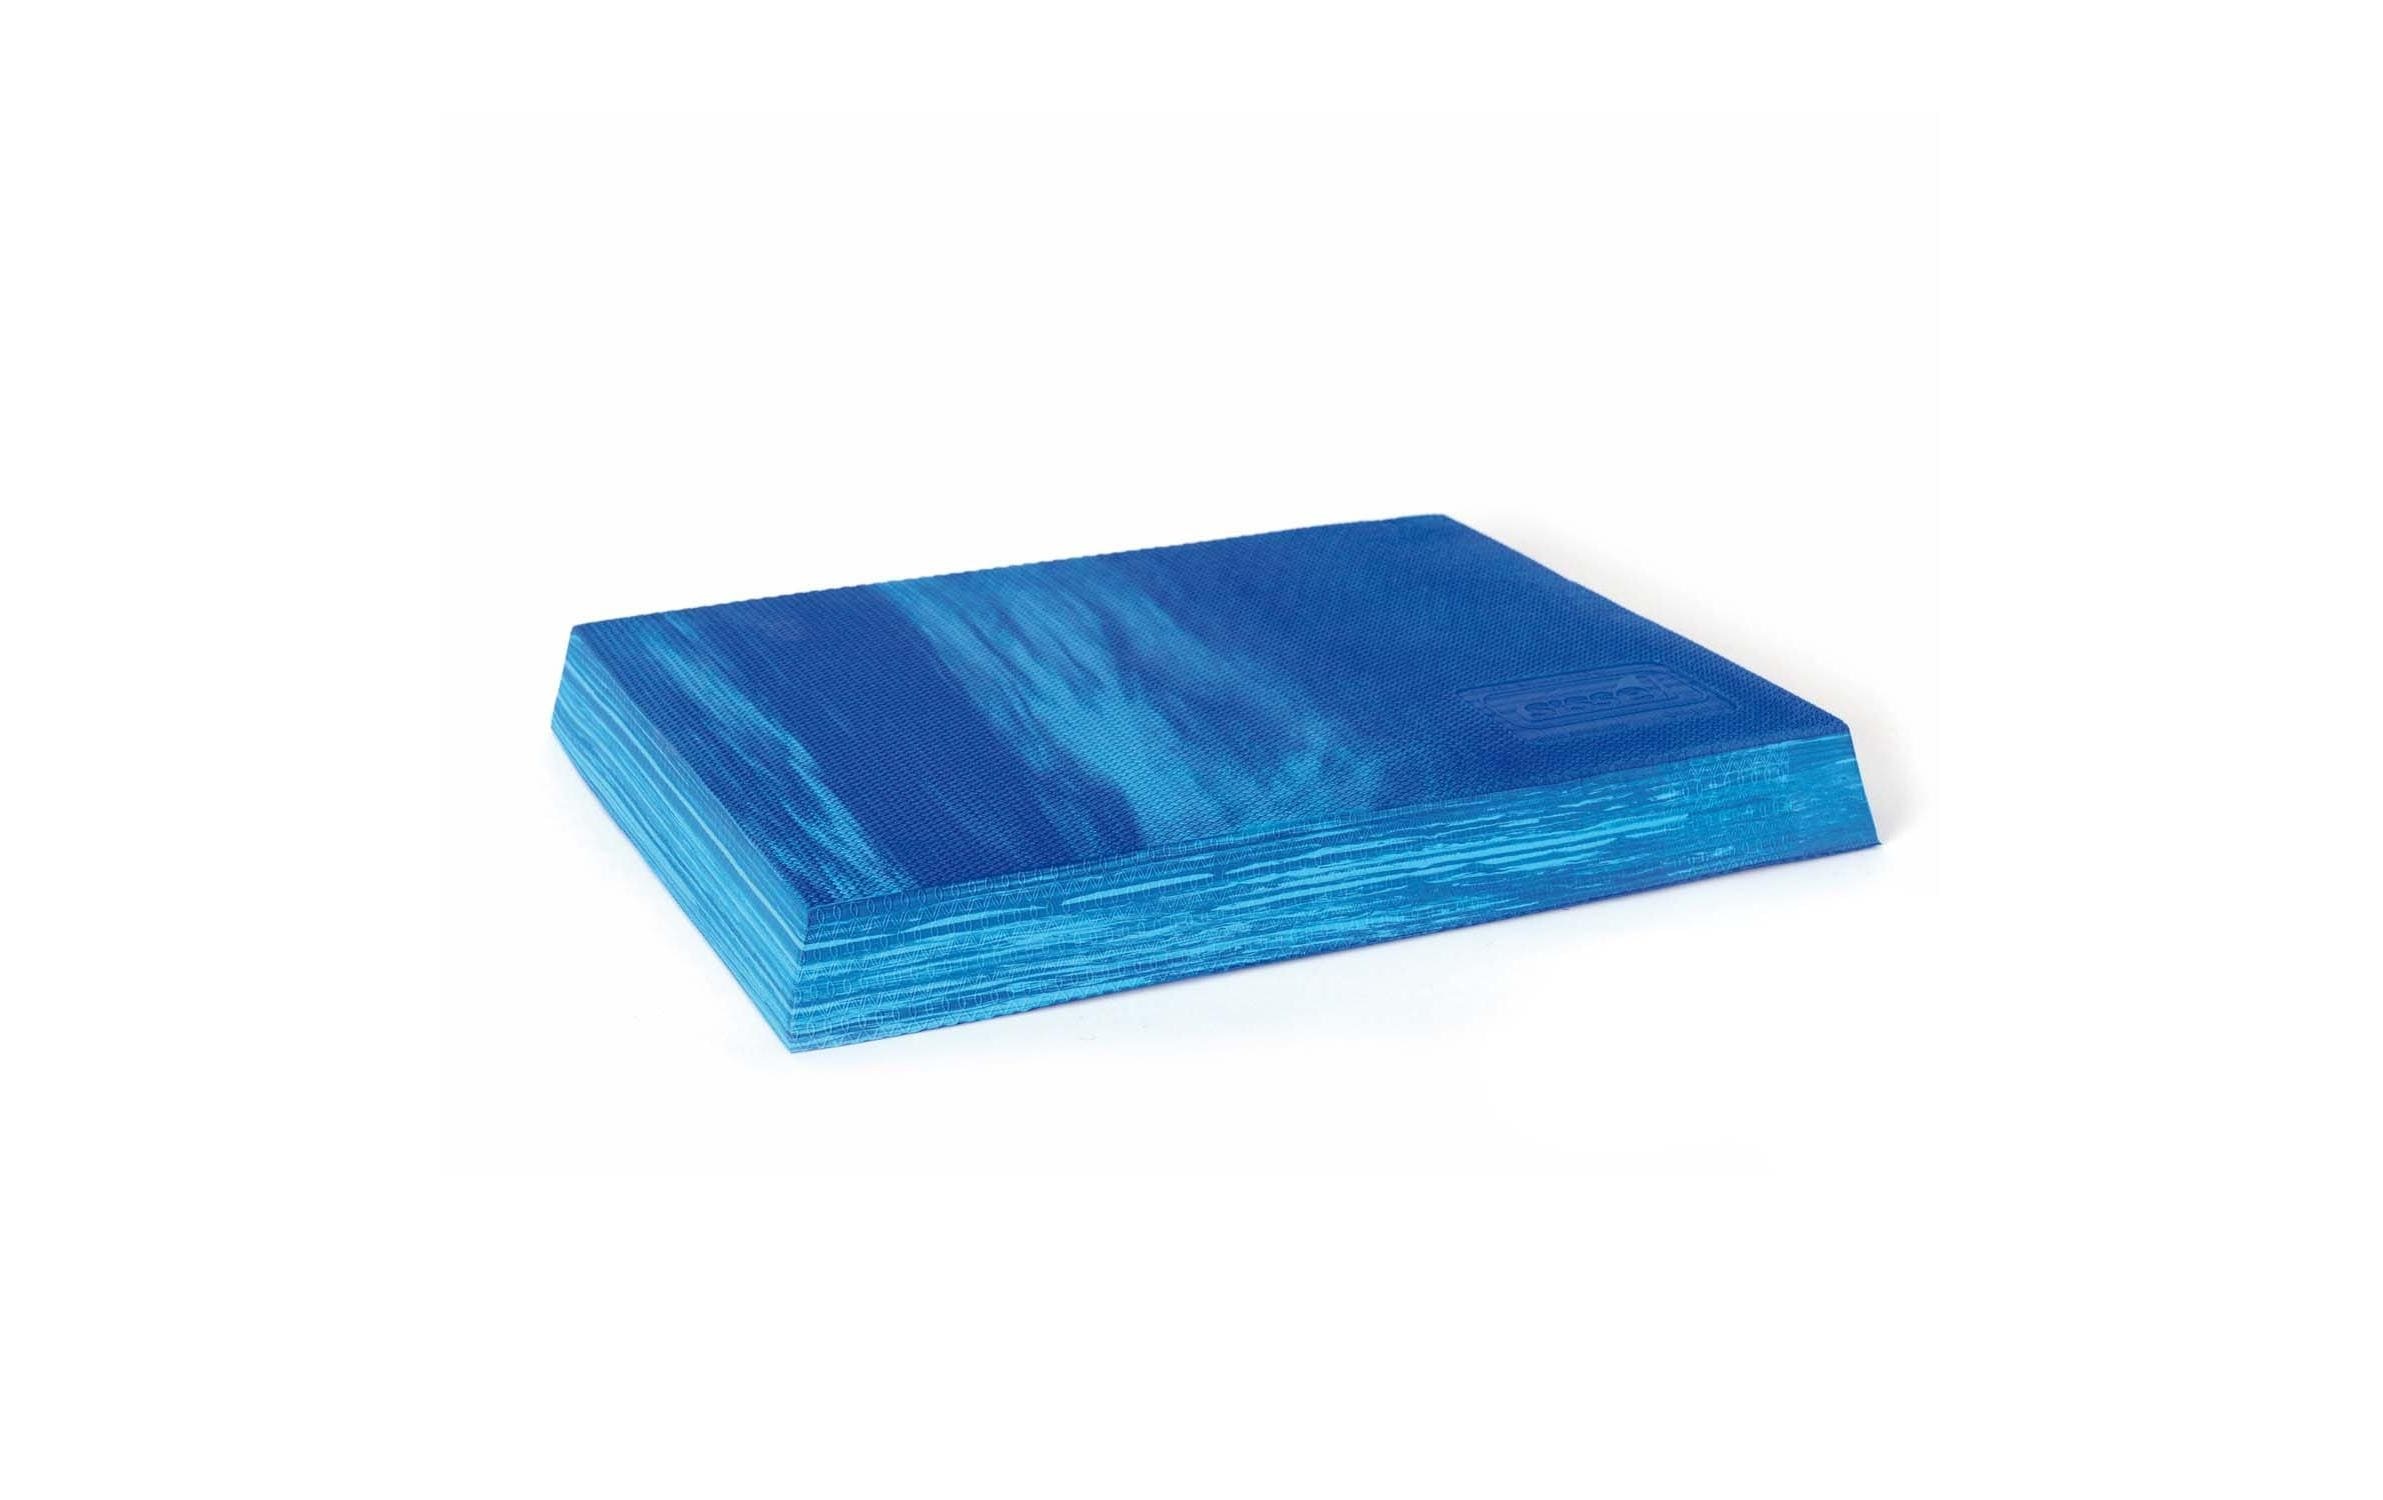 Balancetrainer »Pad blau marmorie«